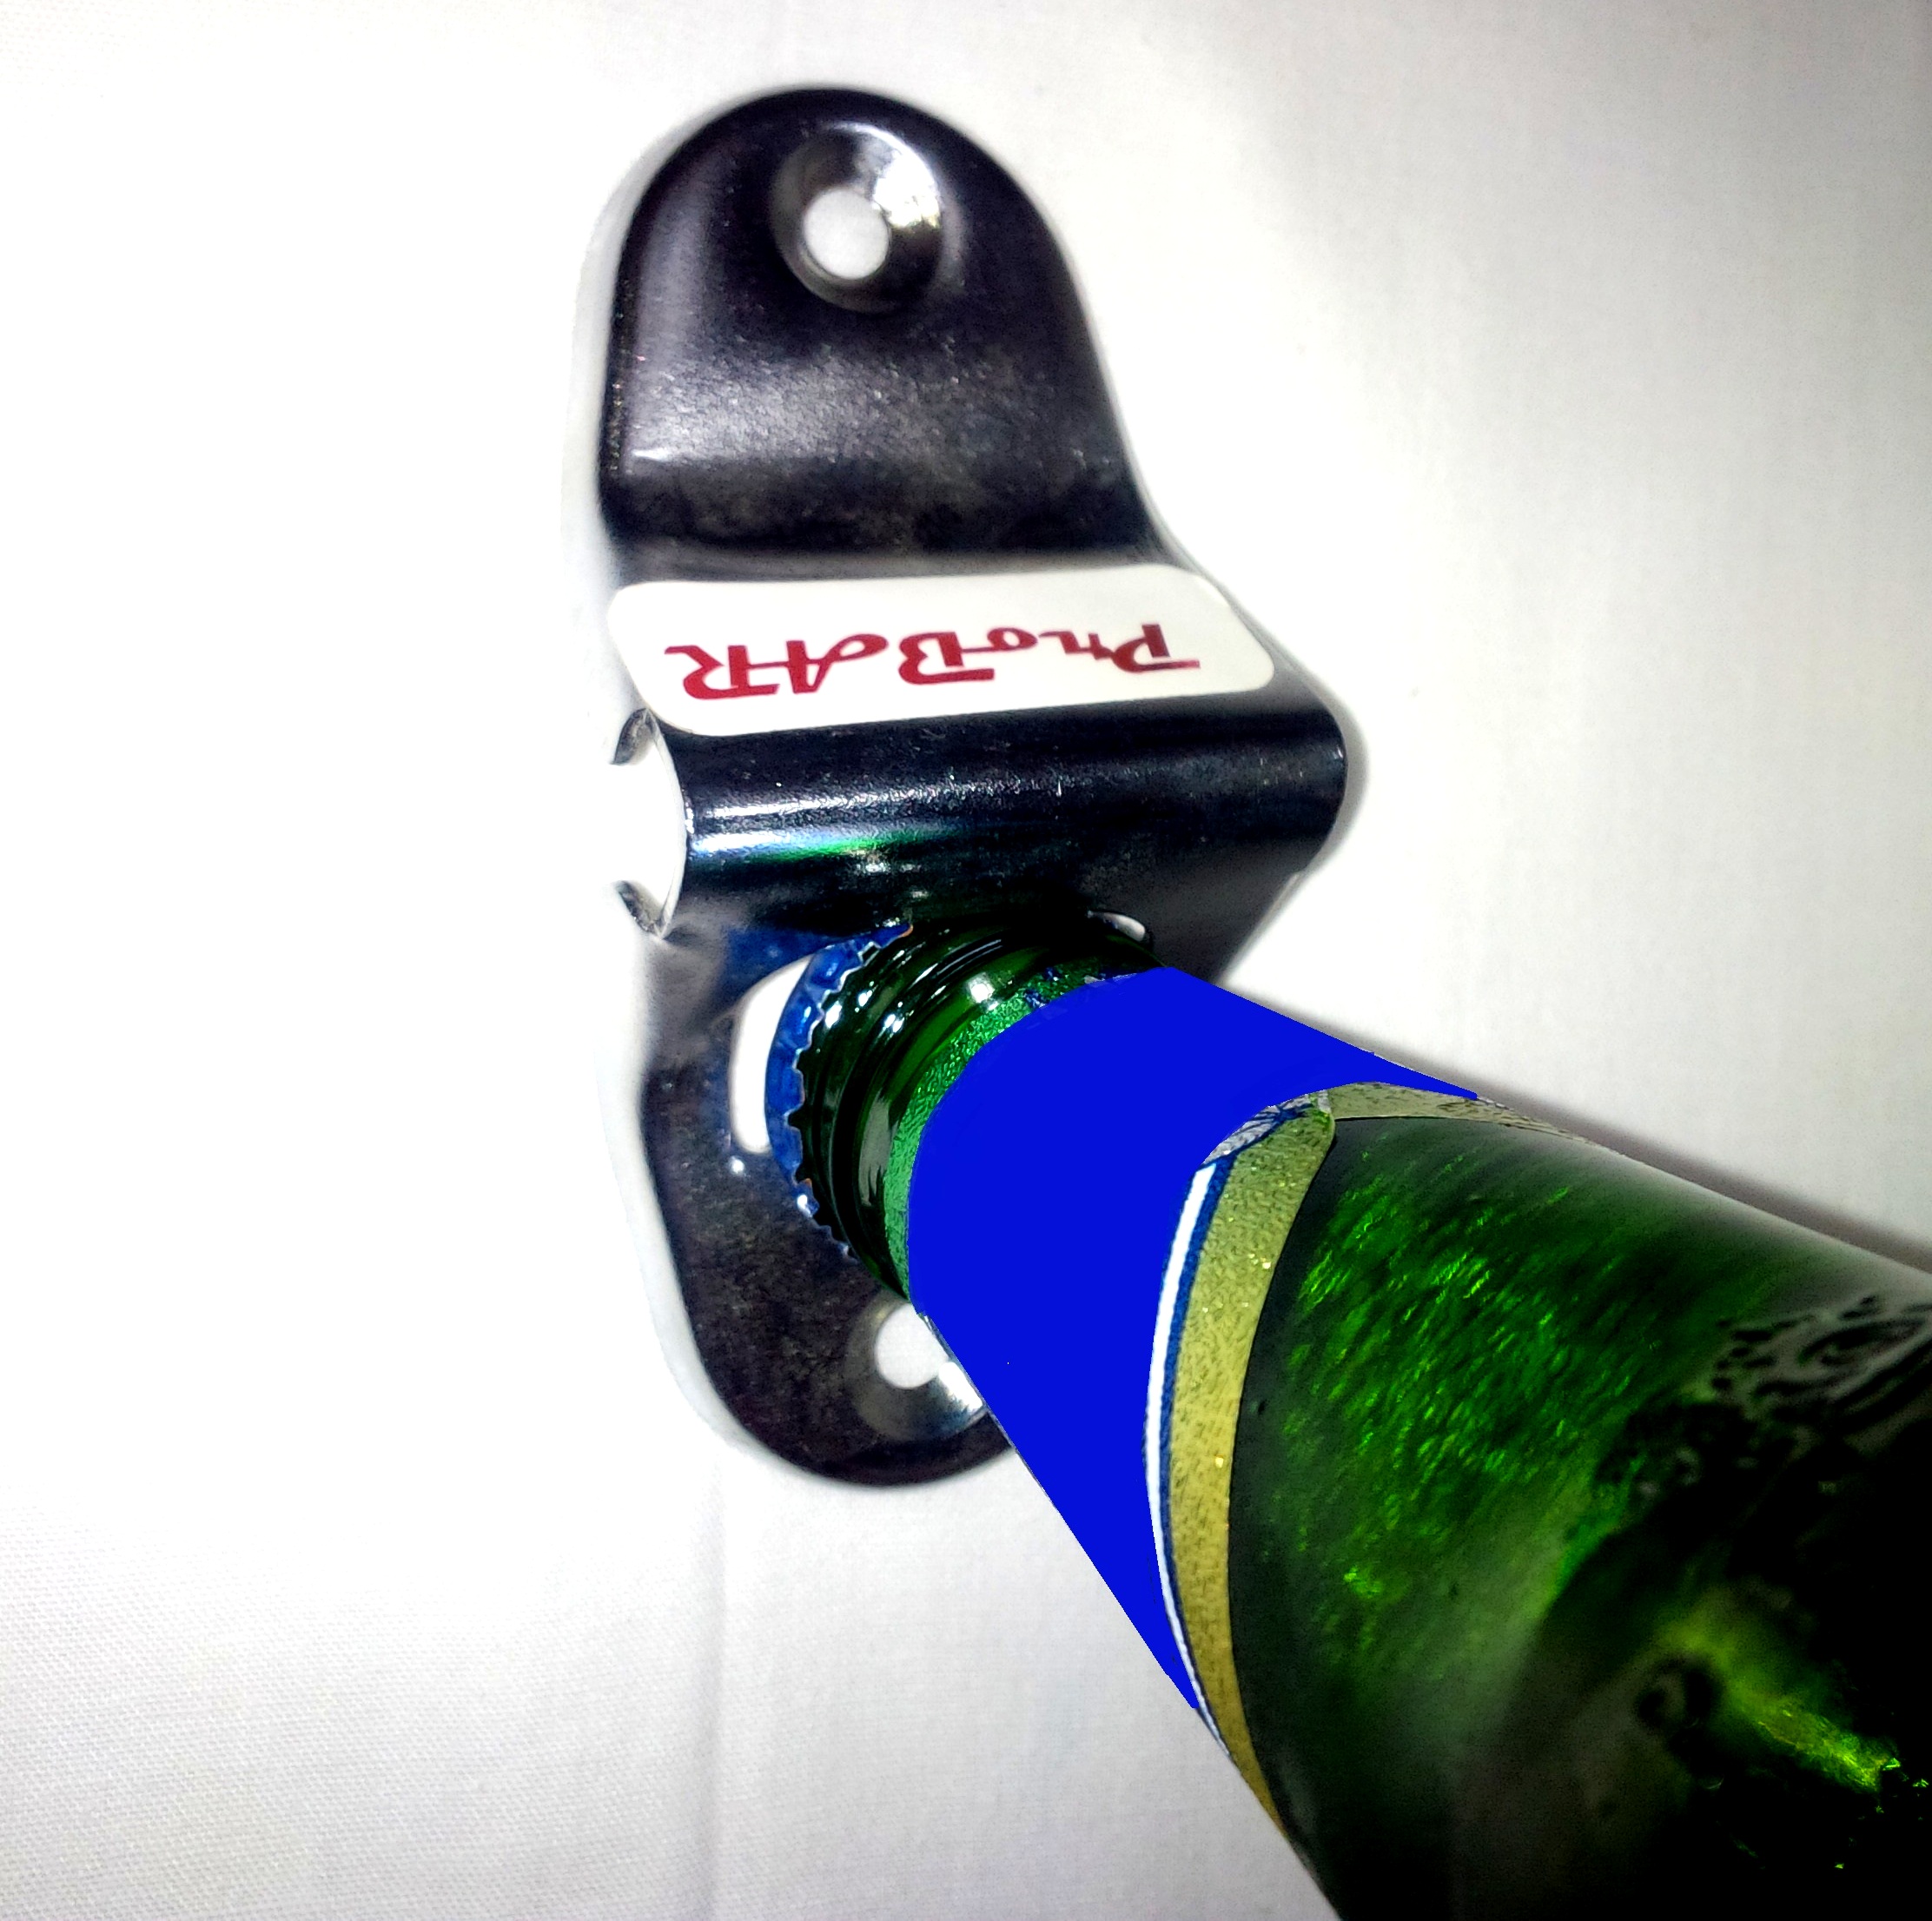 Wall mounted bottle cap opener